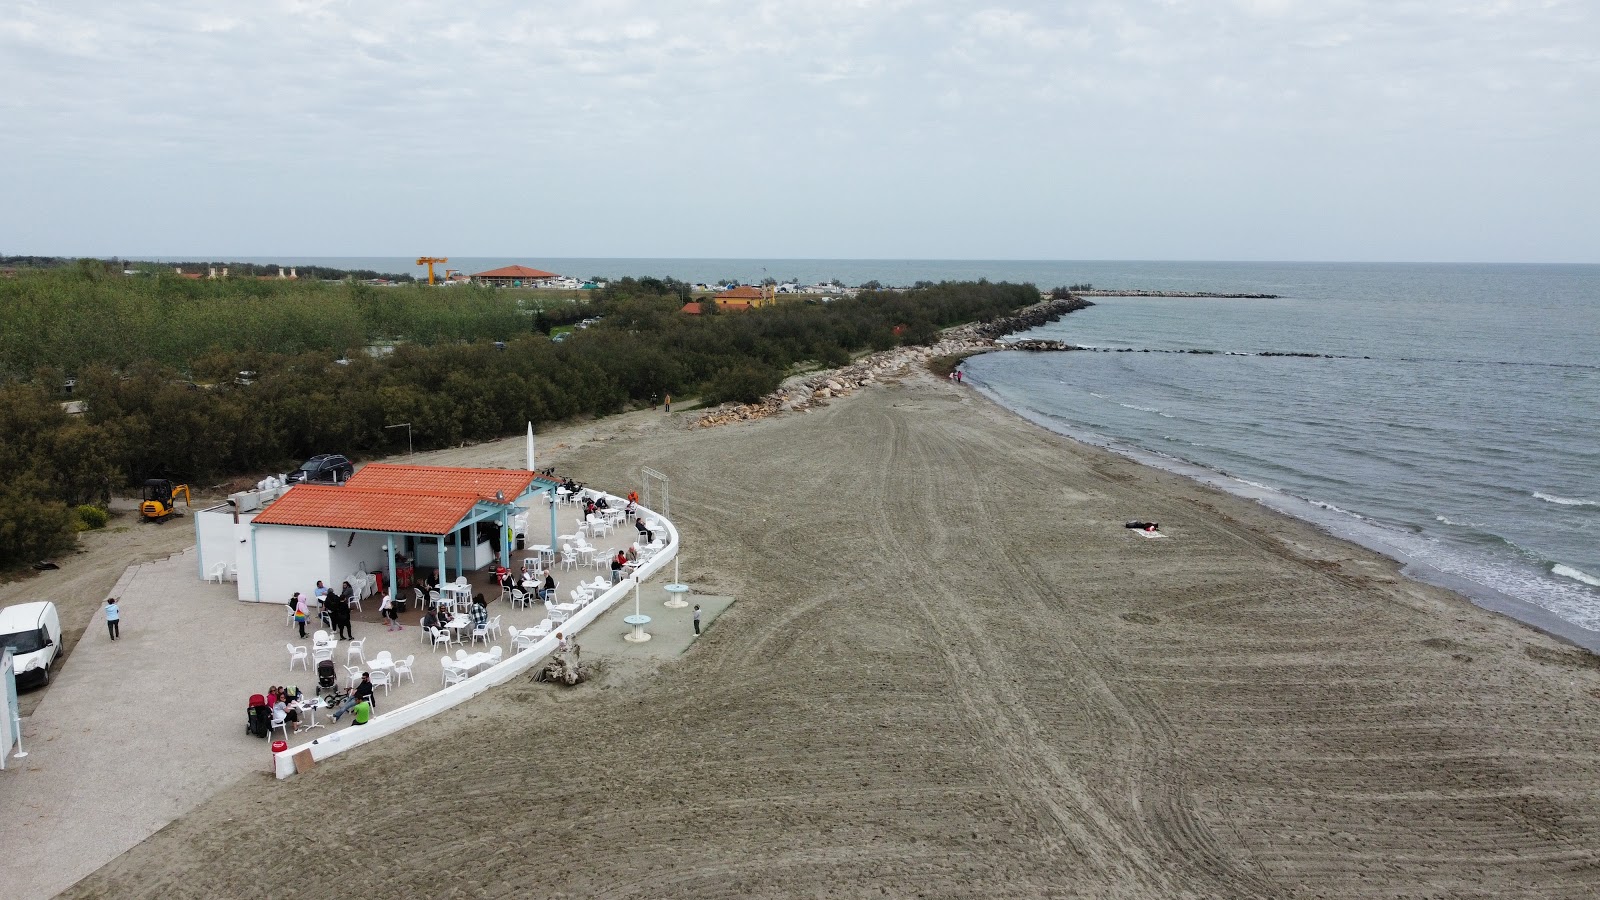 Foto de Spiaggia Delle Conchiglie com alto nível de limpeza